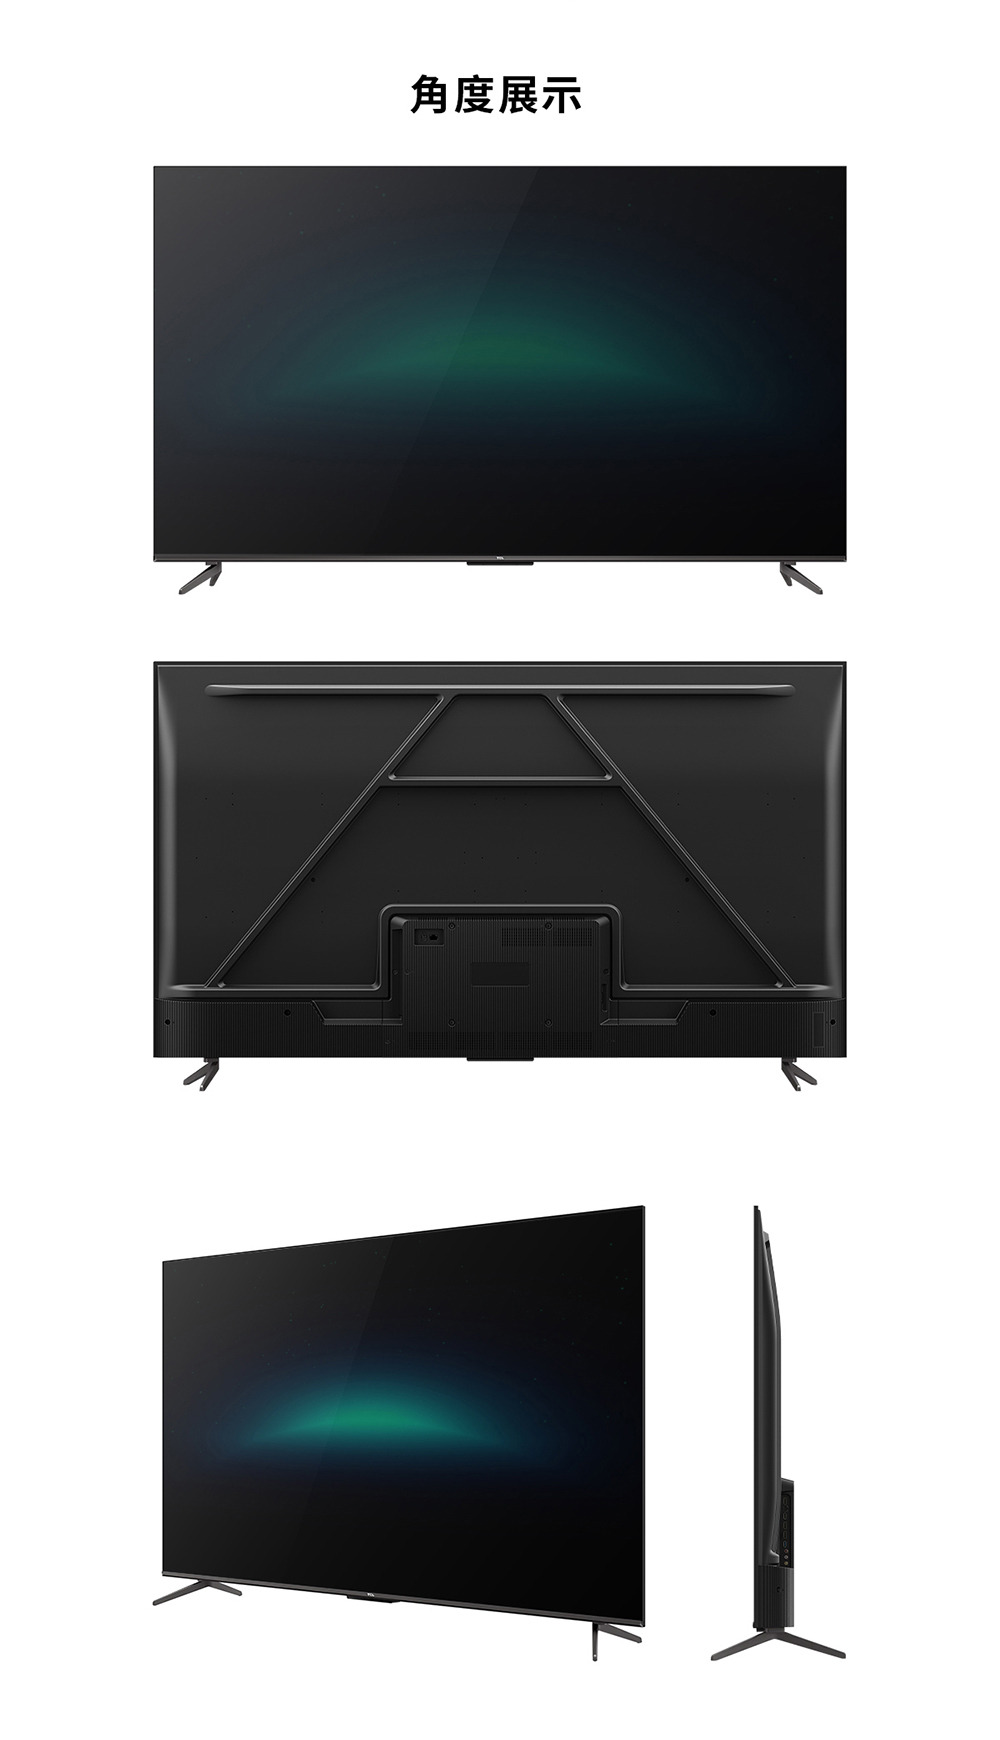 TCL 55吋 P737 4K Google TV 智能連網液晶顯示器的各角度展示。